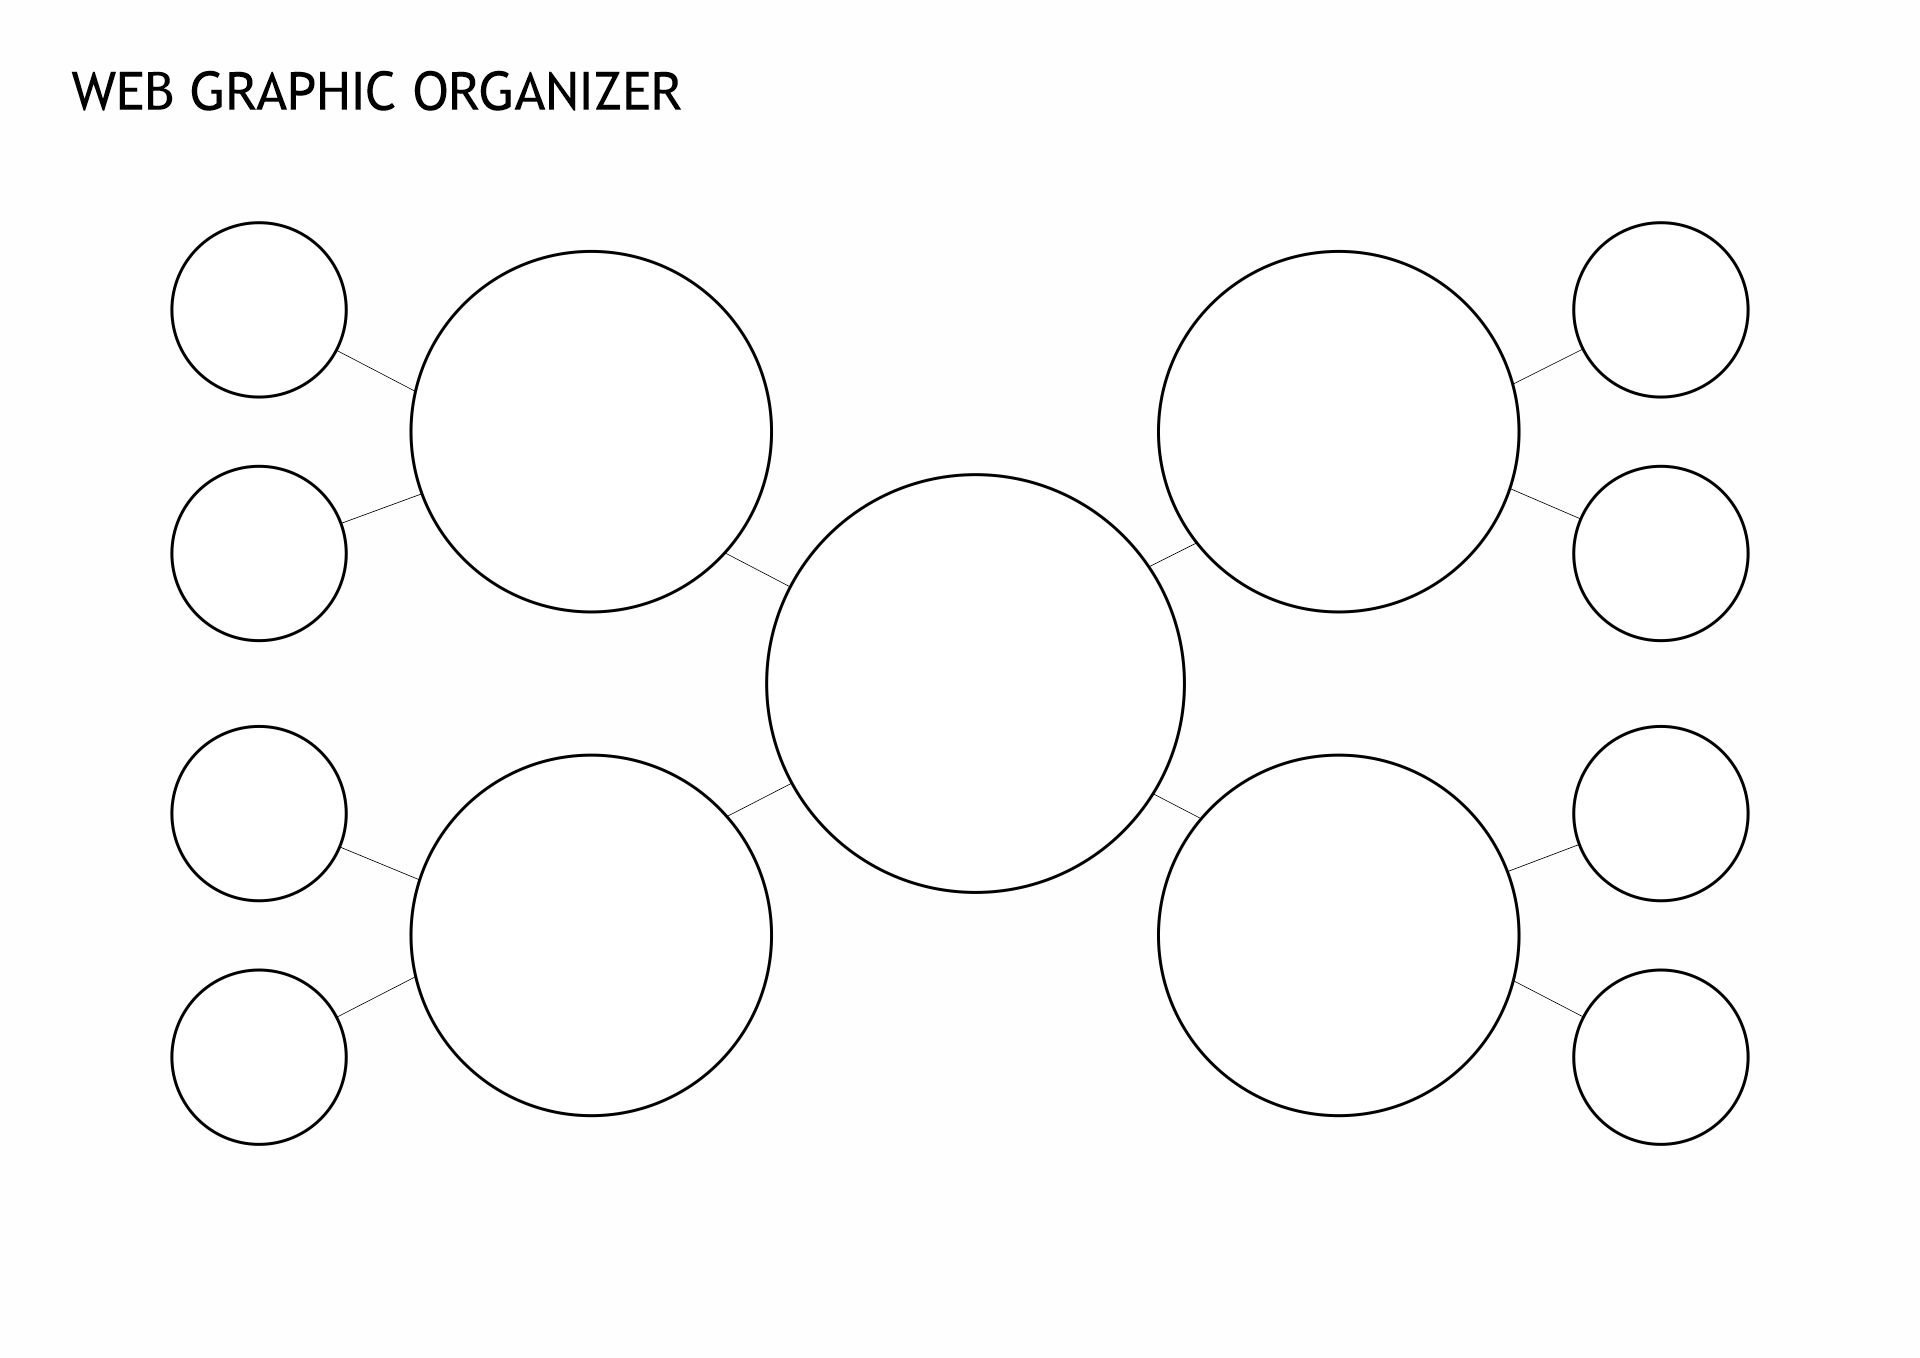 Printable Web Graphic Organizer Image